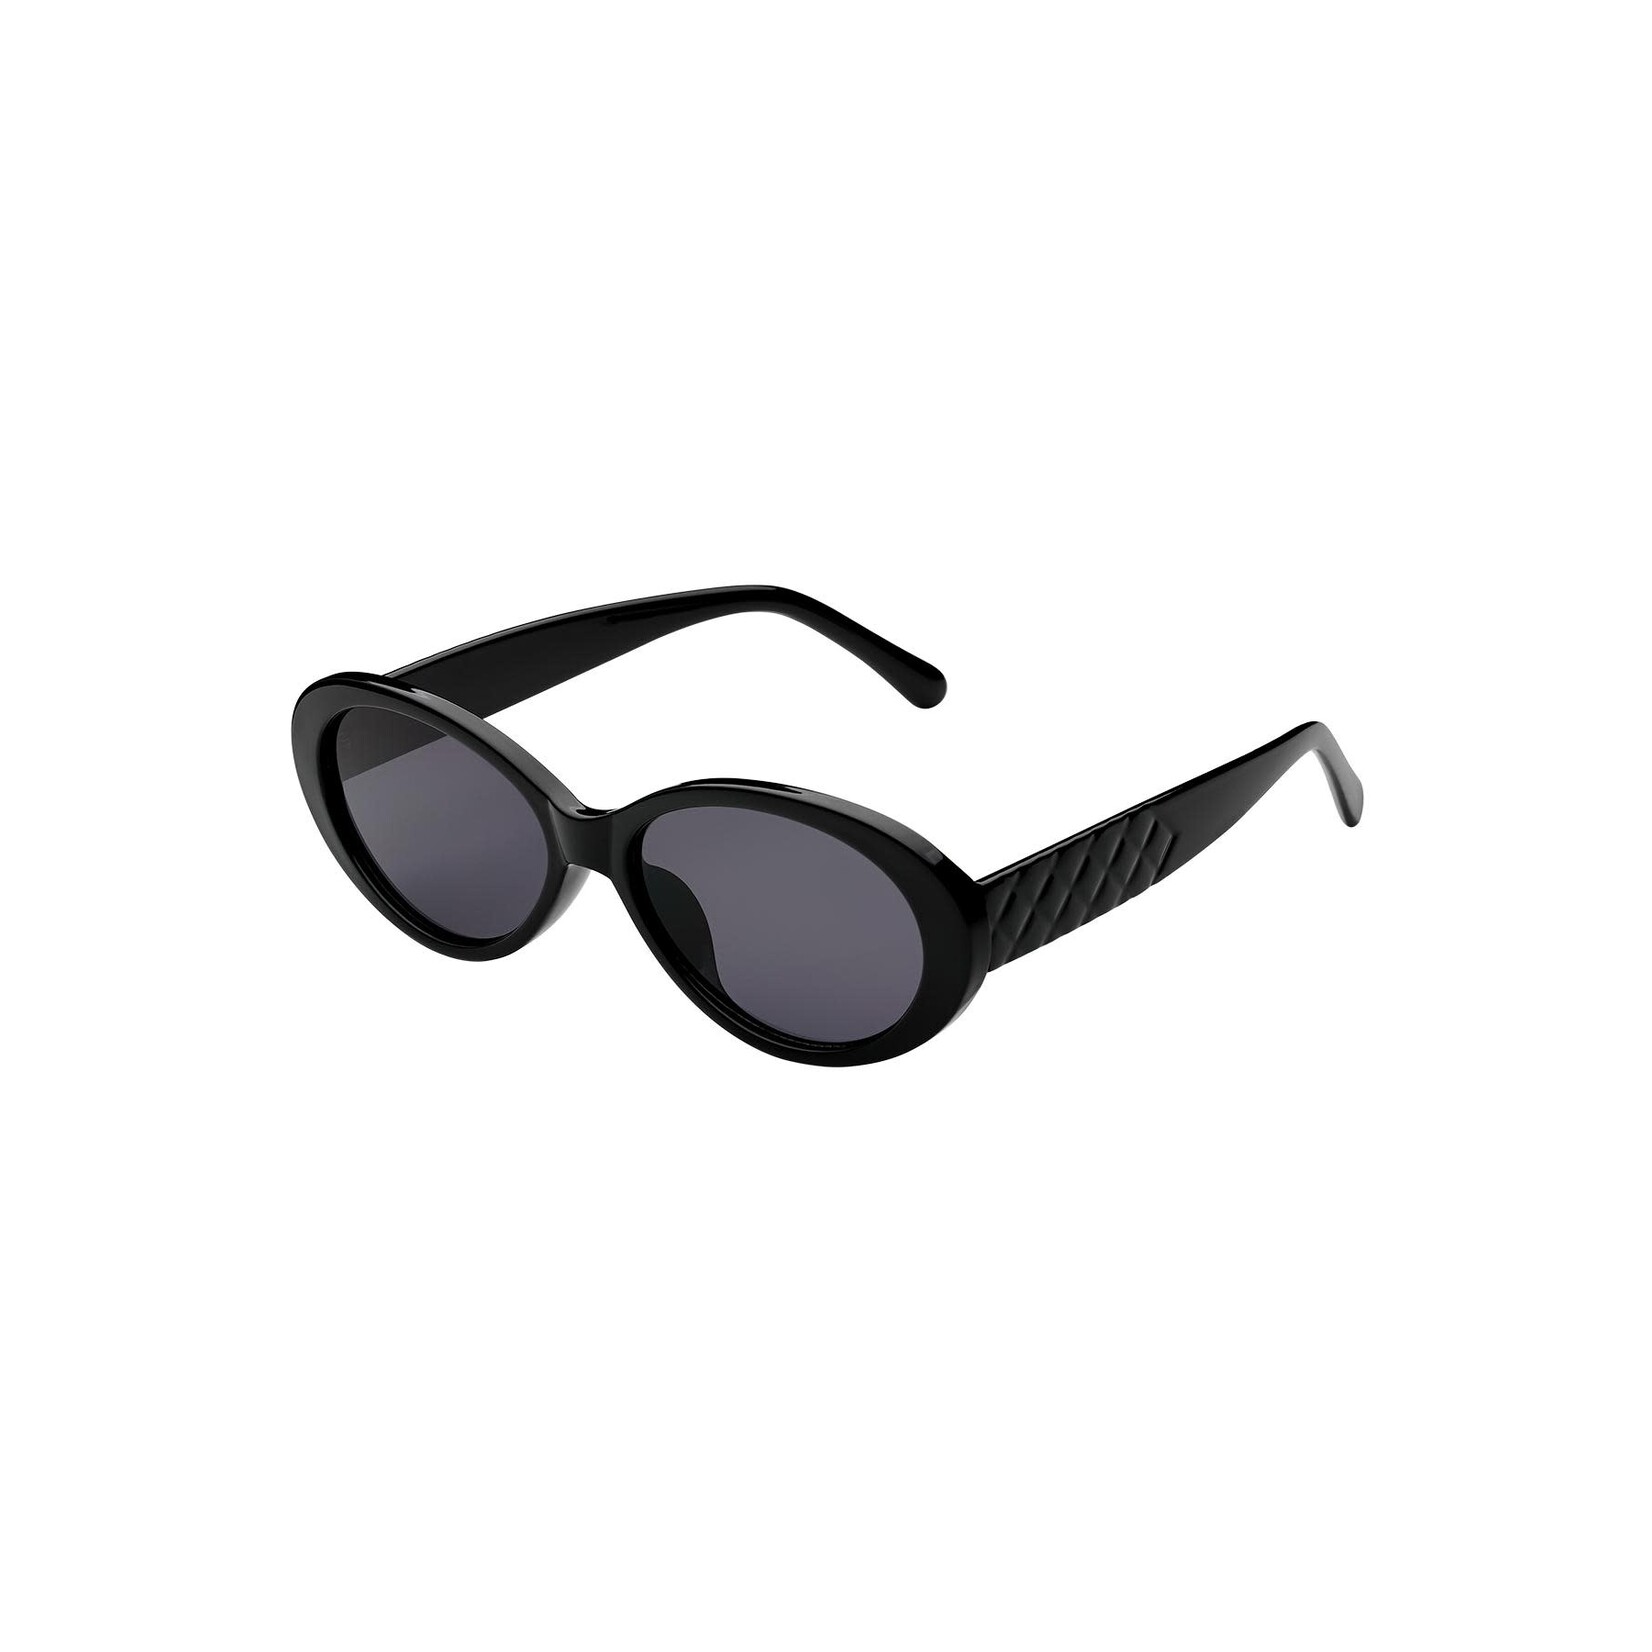 Accessoires Sunglasses oval glasses black